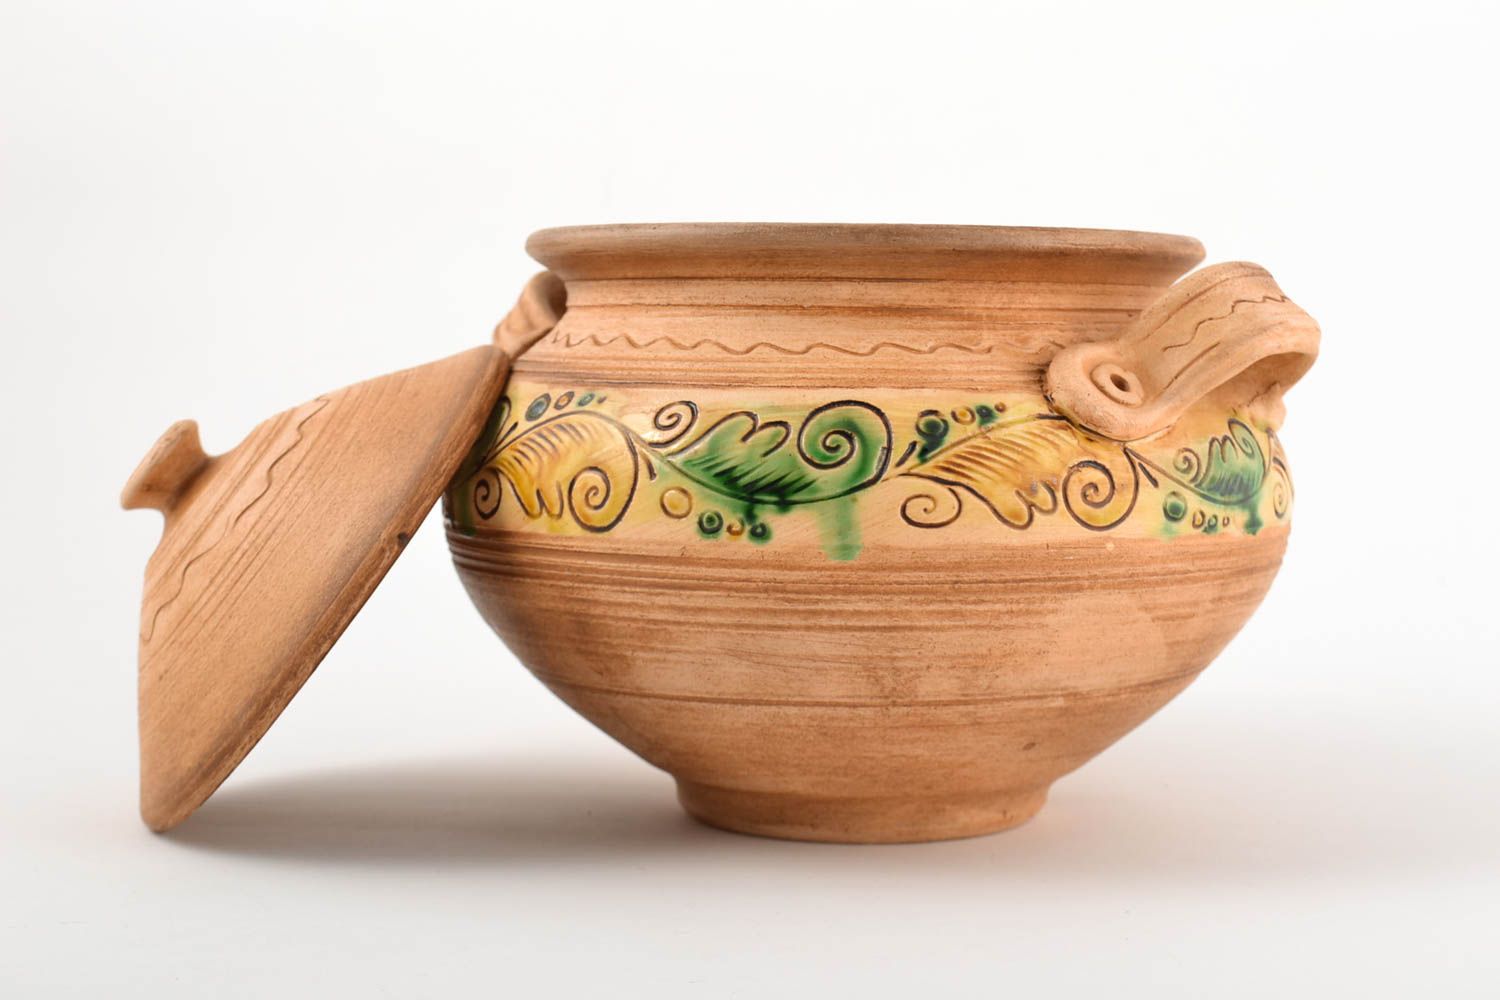 Keramik Geschirr handmade Ton Topf Küchen Geschirr Geschenk Idee bemalt schön foto 4